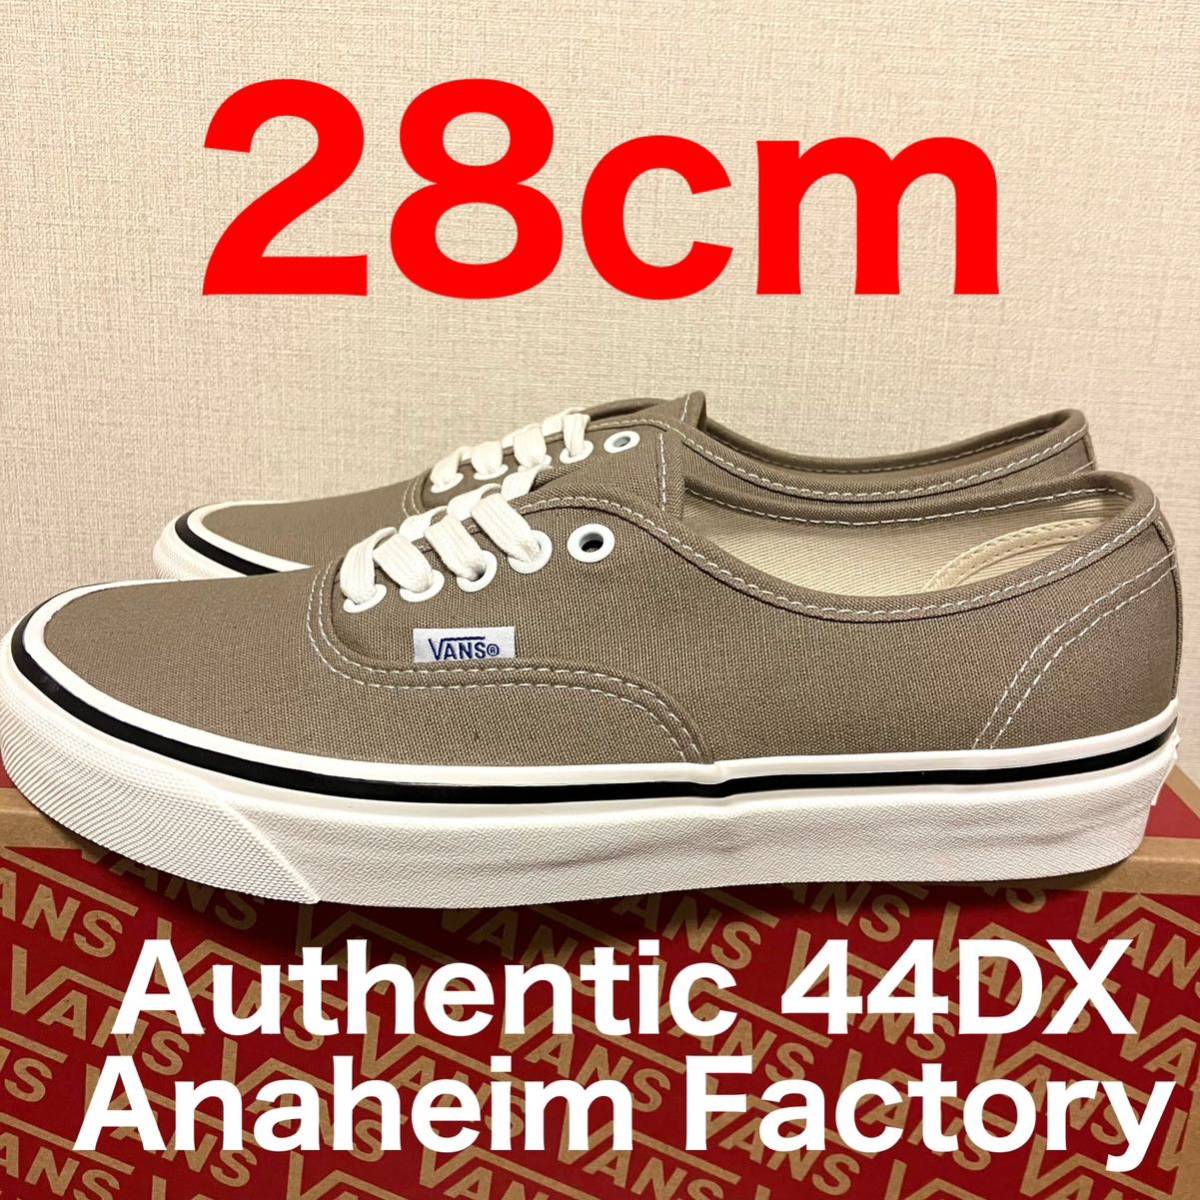 時間指定不可 28 FACTORY Deck Dx VANS DX Authentic /AUTHENTIC 44DX